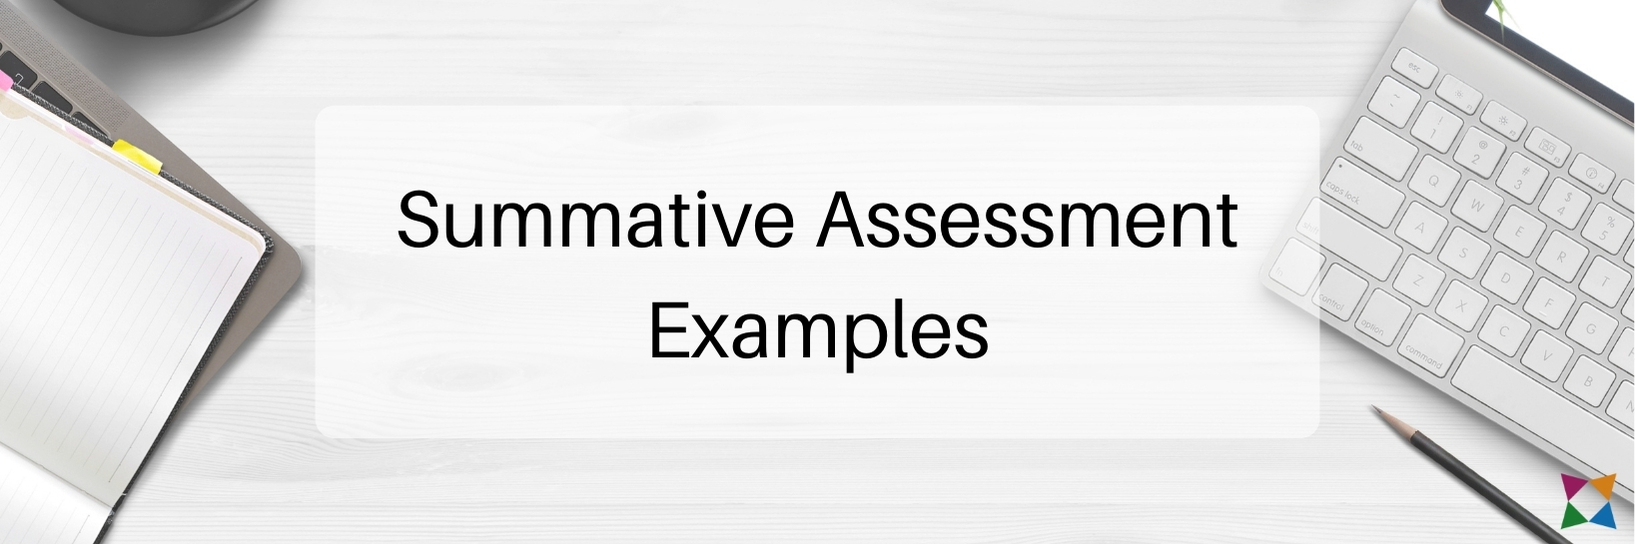 summative-assessment-examples